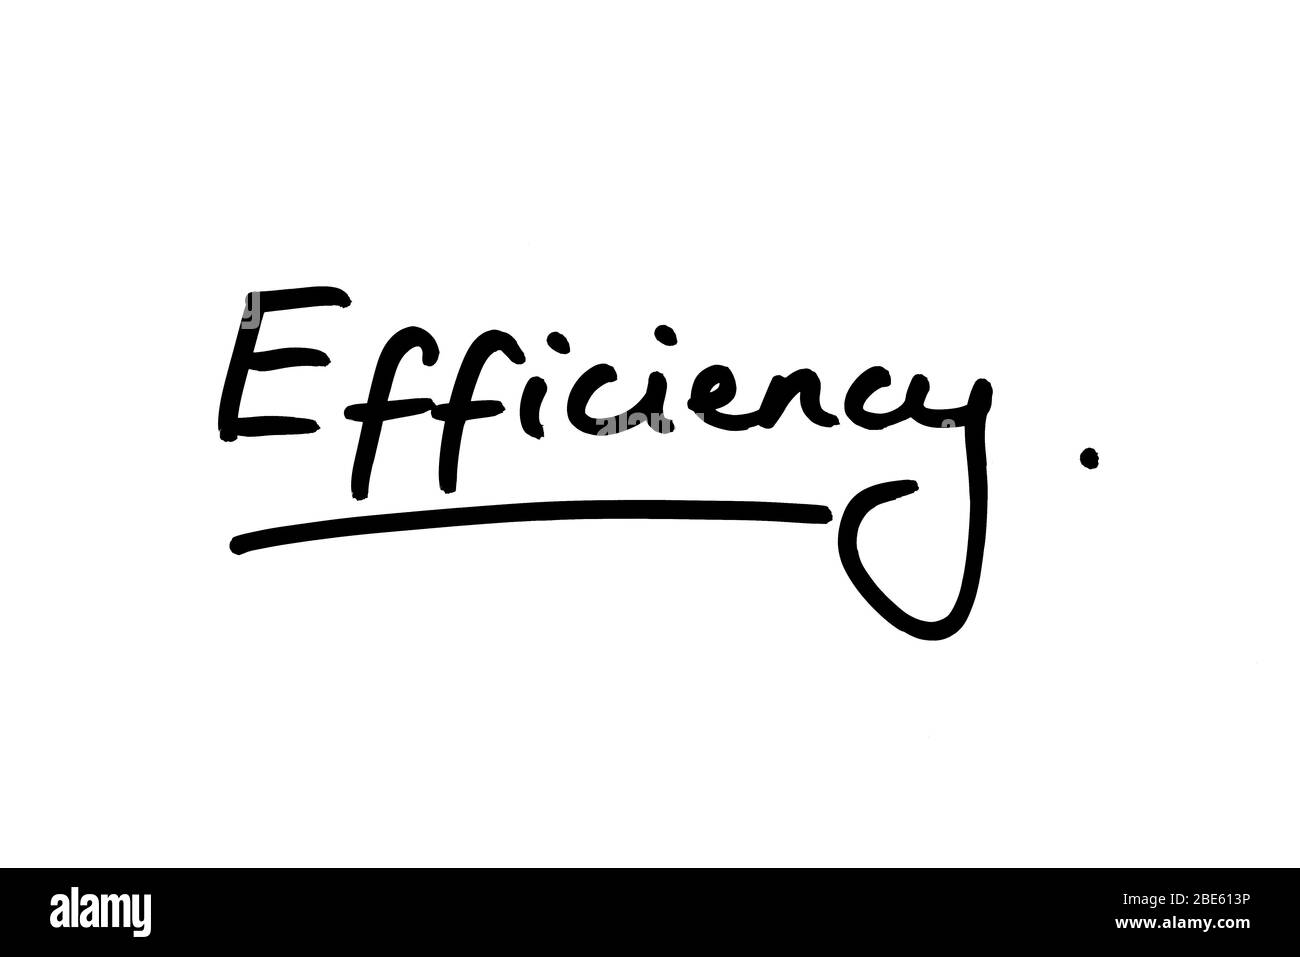 Efficiency handwritten on a white background. Stock Photo